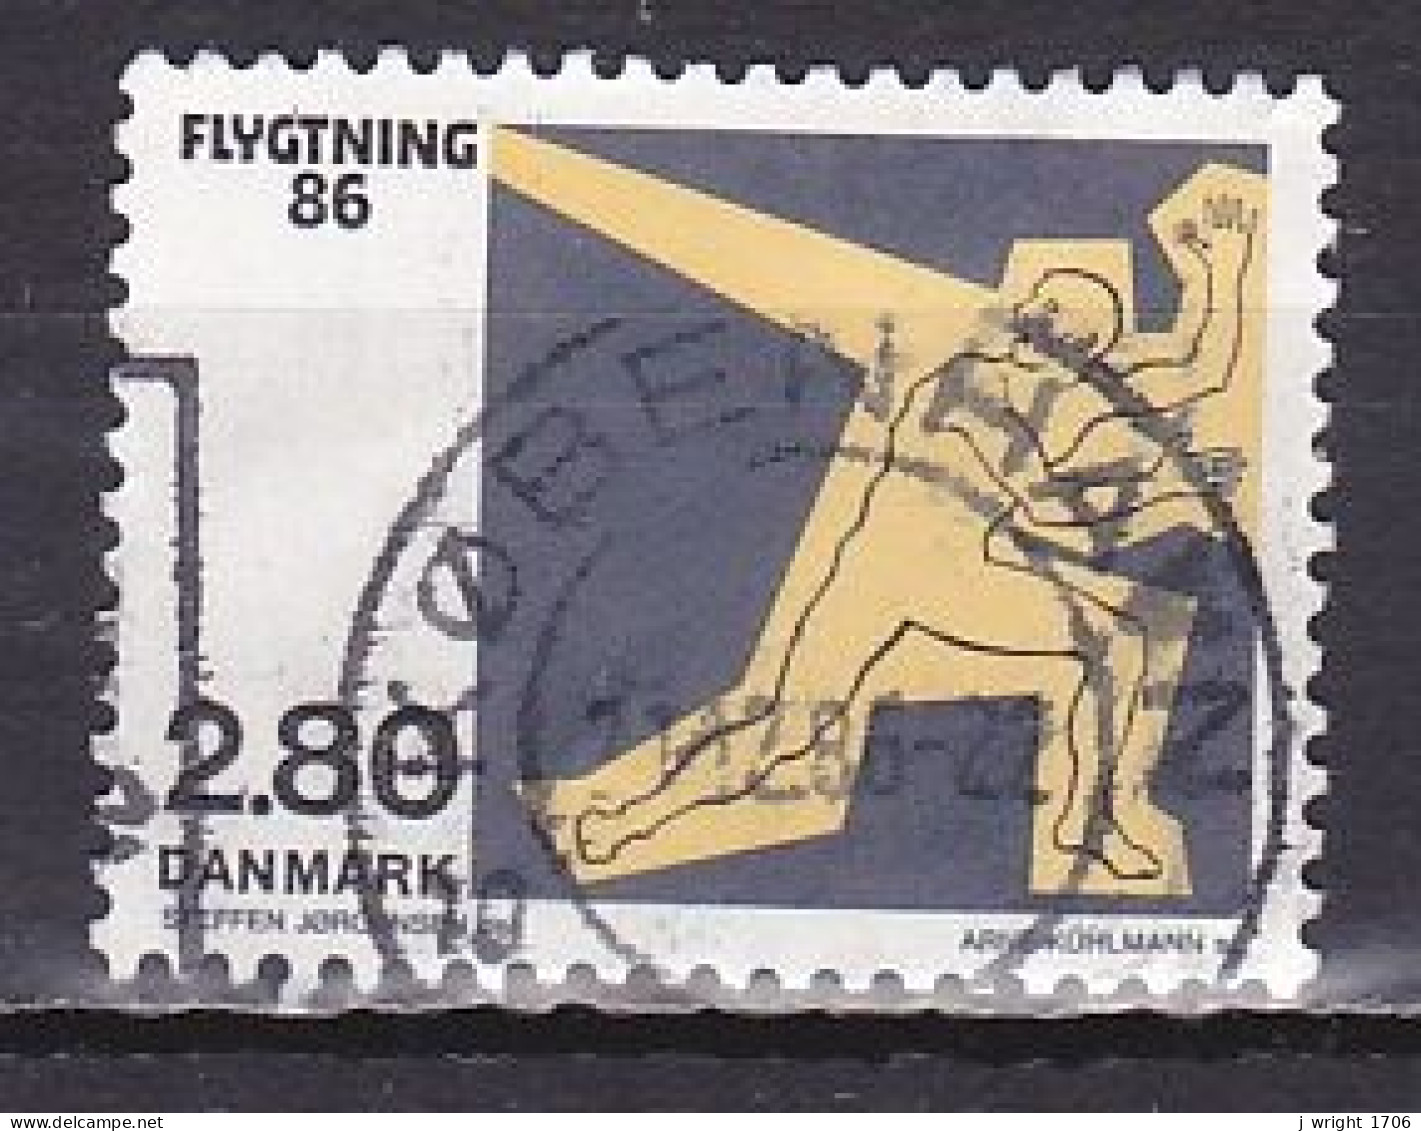 Denmark, 1986, Refugees 86, 2.80kr, USED - Gebraucht